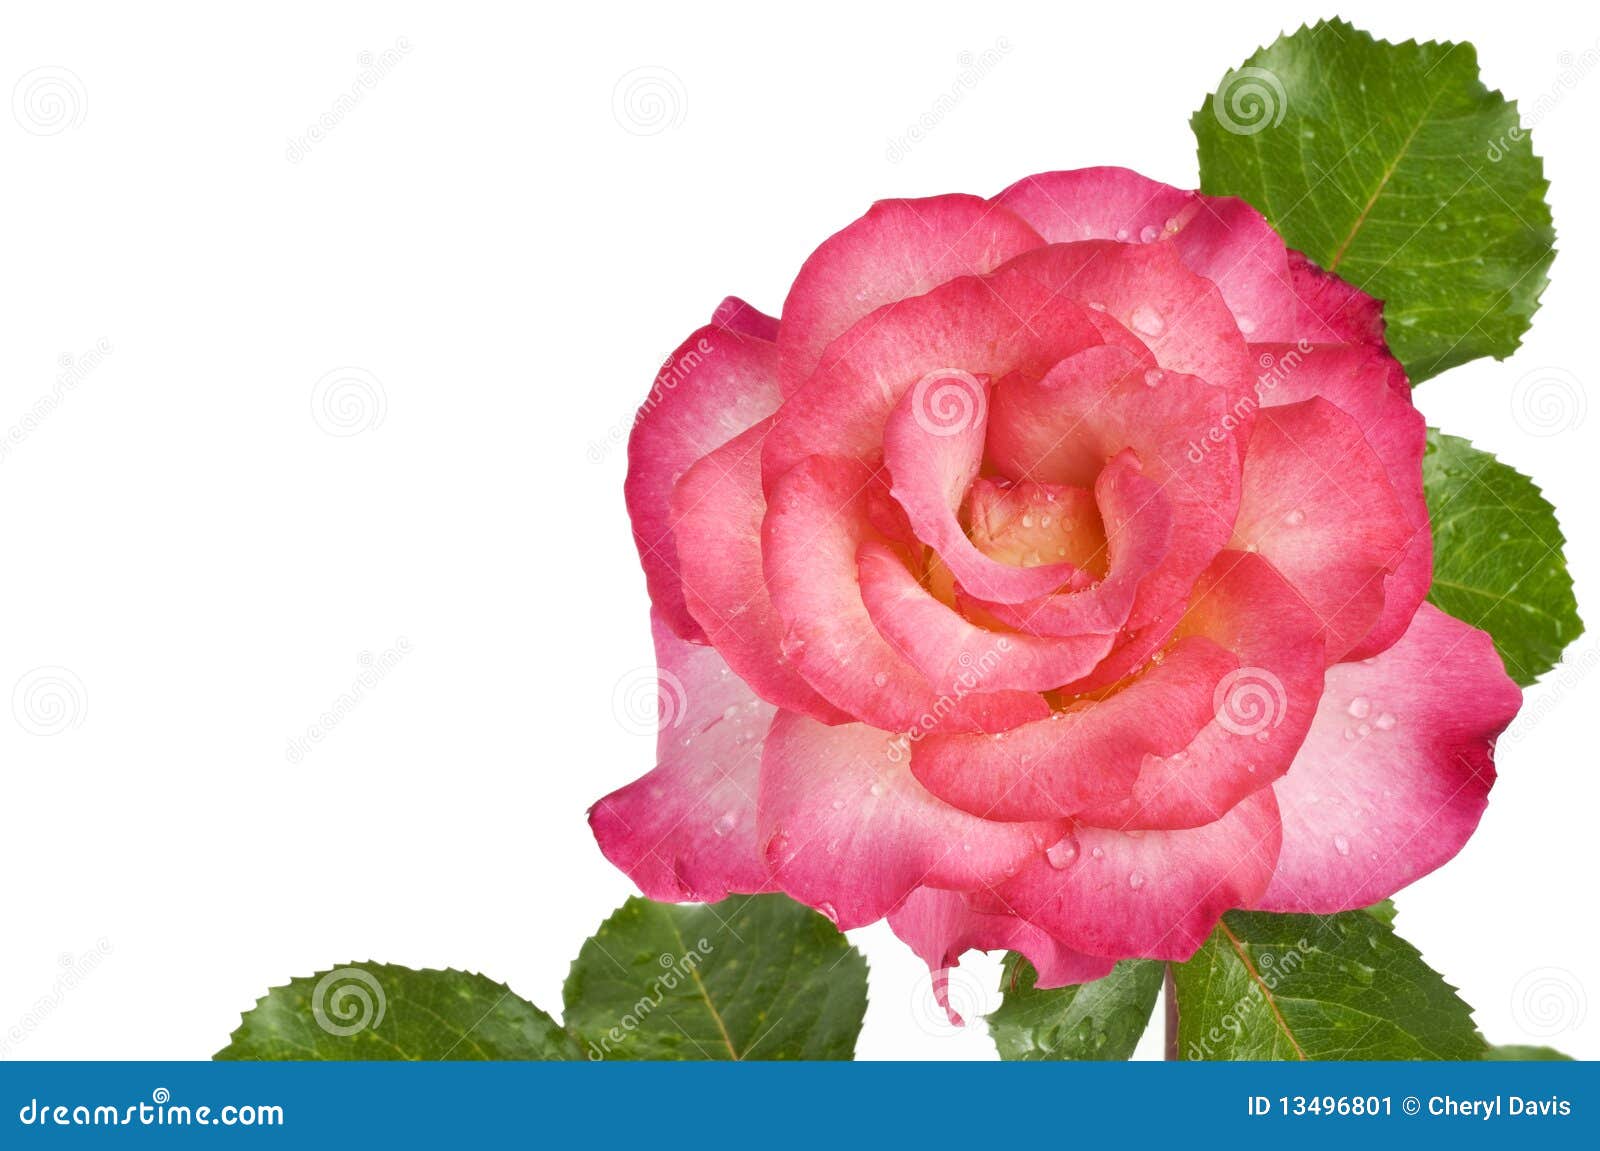 Single Pink Rose White Background